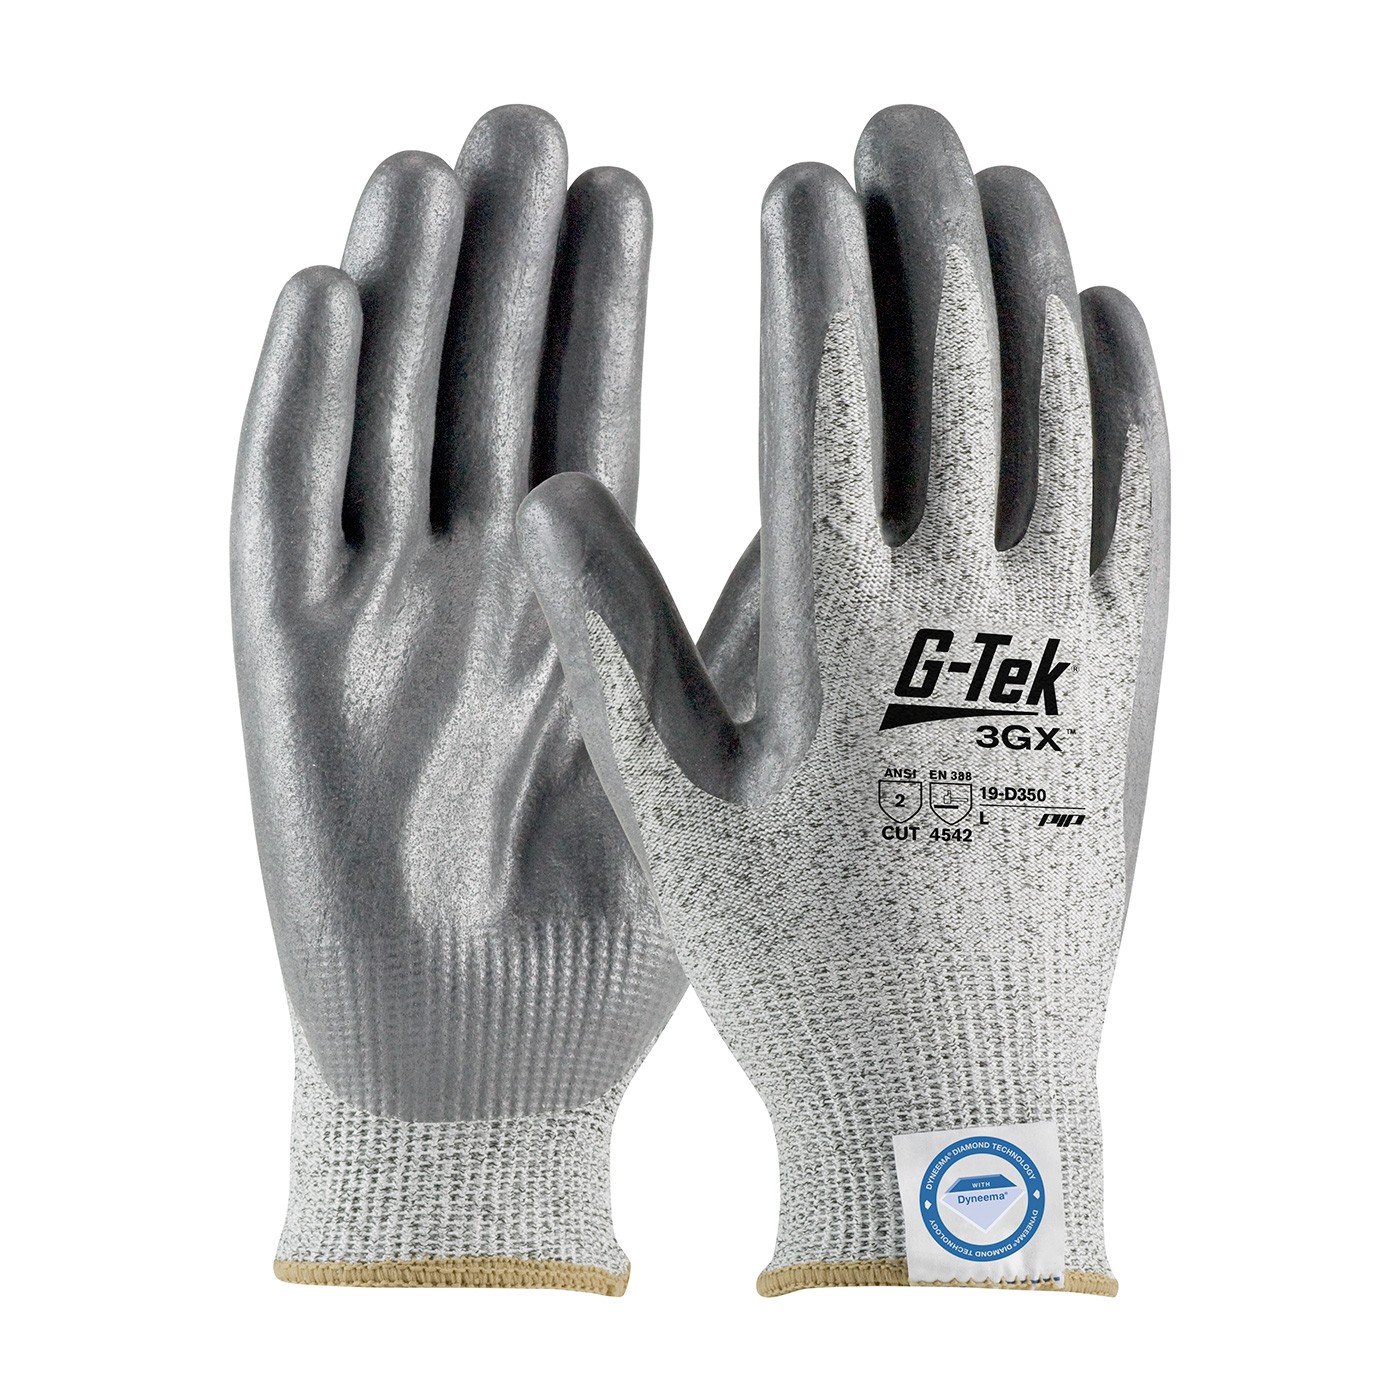 G-Tek® 3GX® Seamless Knit Dyneema® Diamond Blended Glove with Nitrile Coated Foam Grip on Palm & Fingers  (#19-D350)